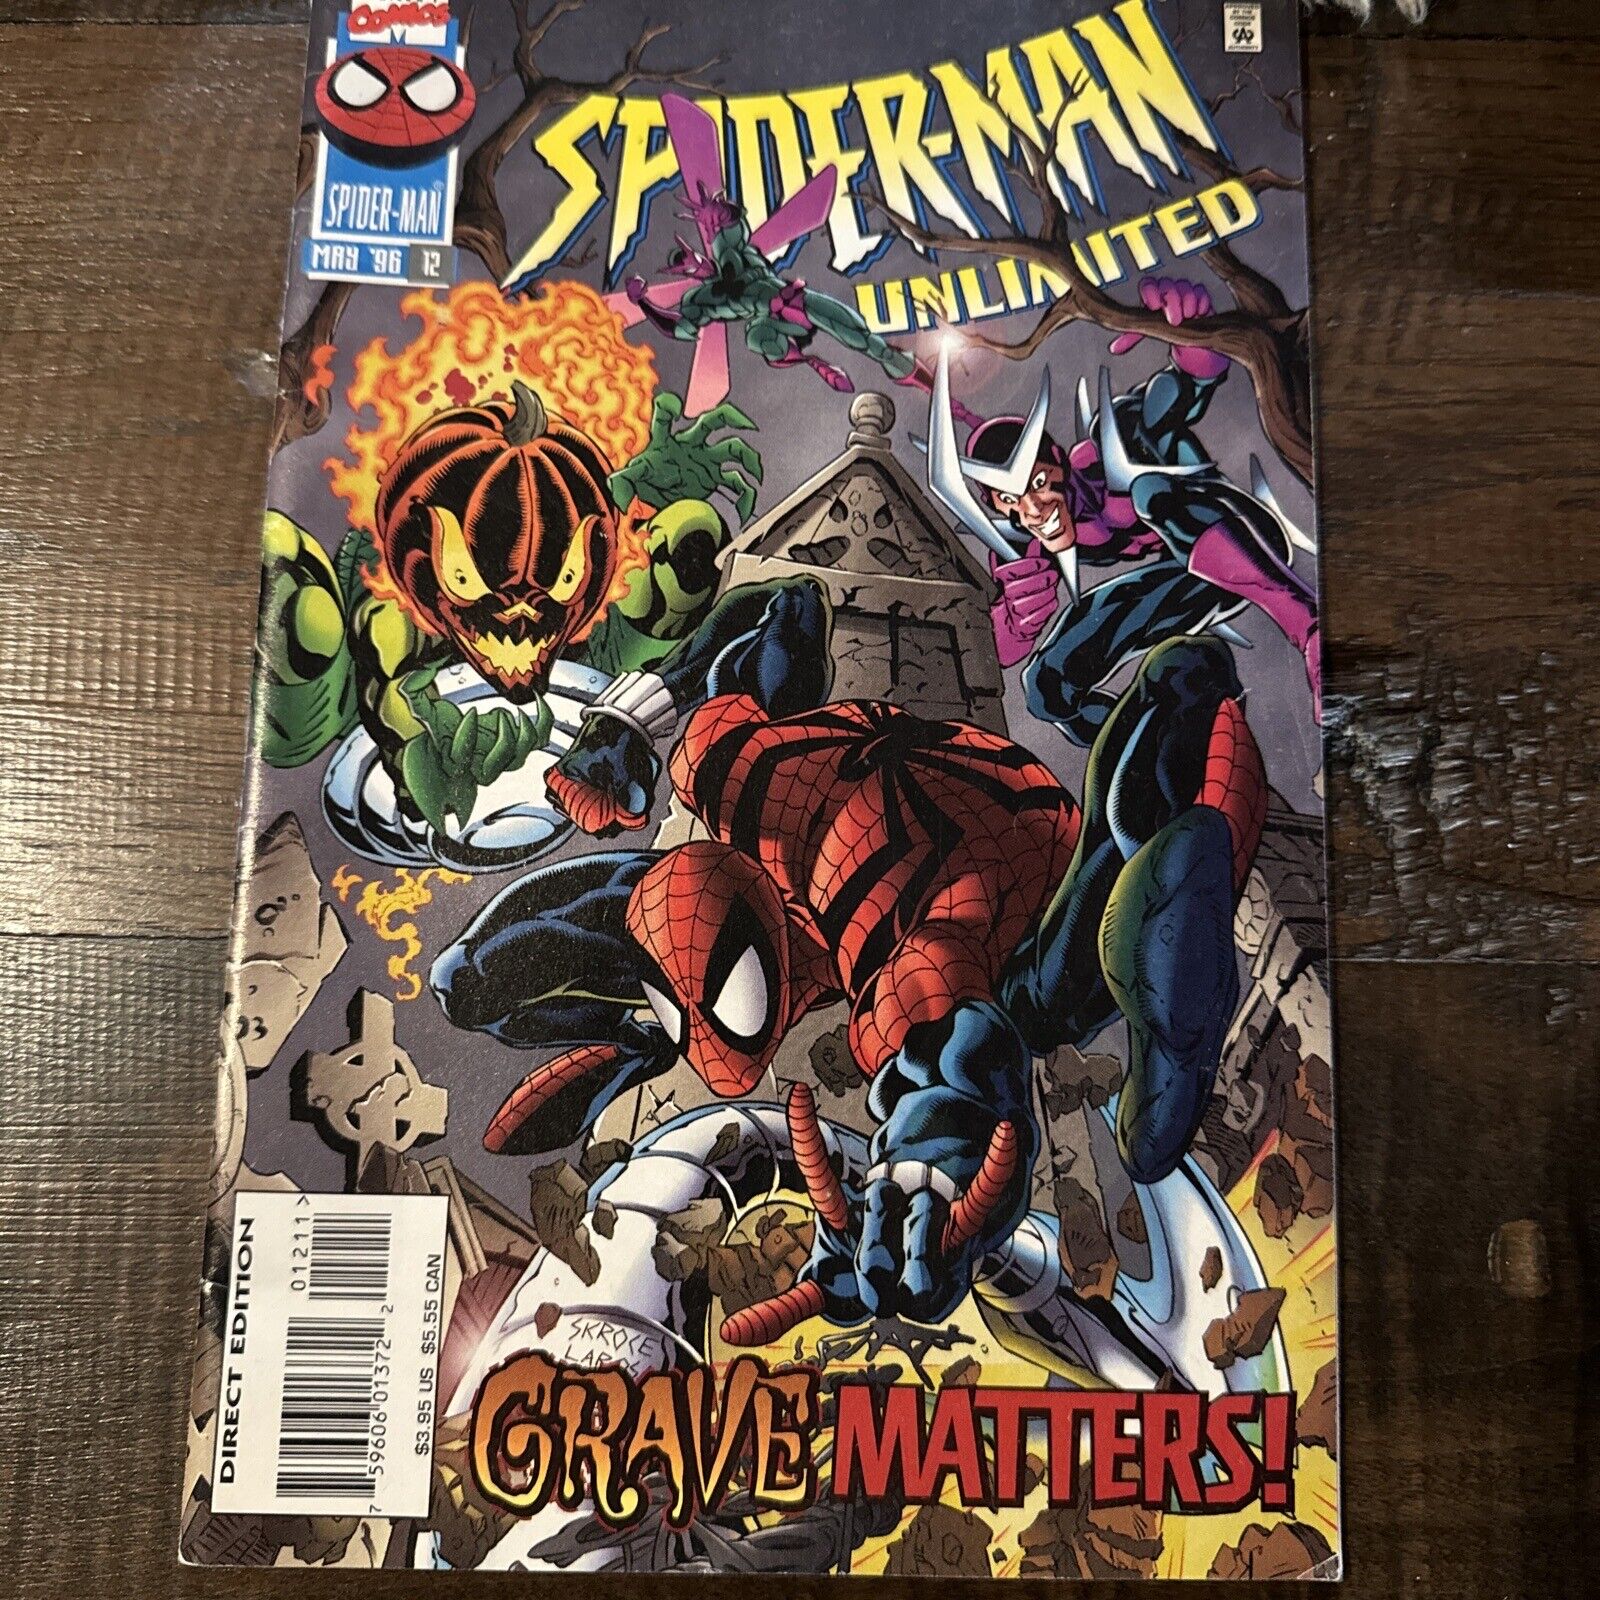 Spider-Man Unlimited #12 (Marvel Comics May 1996)